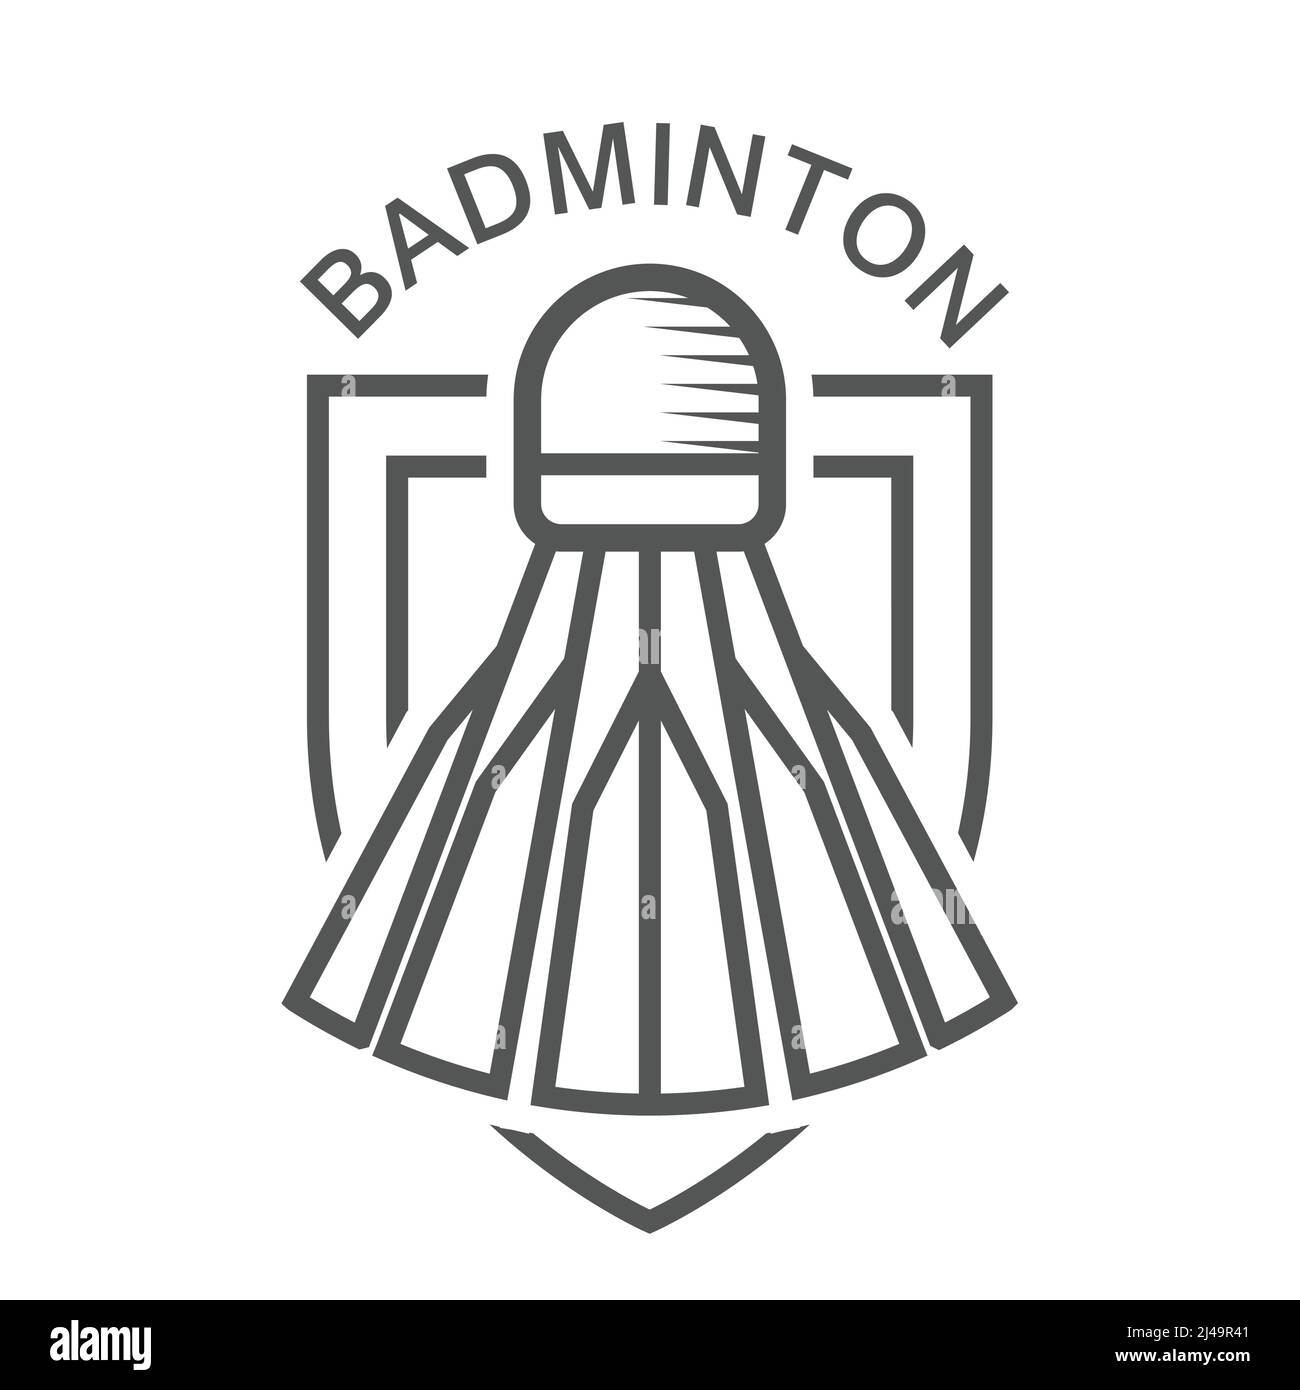 Badminton shuttlecock over shield, stylized badminton emblem or blazon, vector Stock Vector